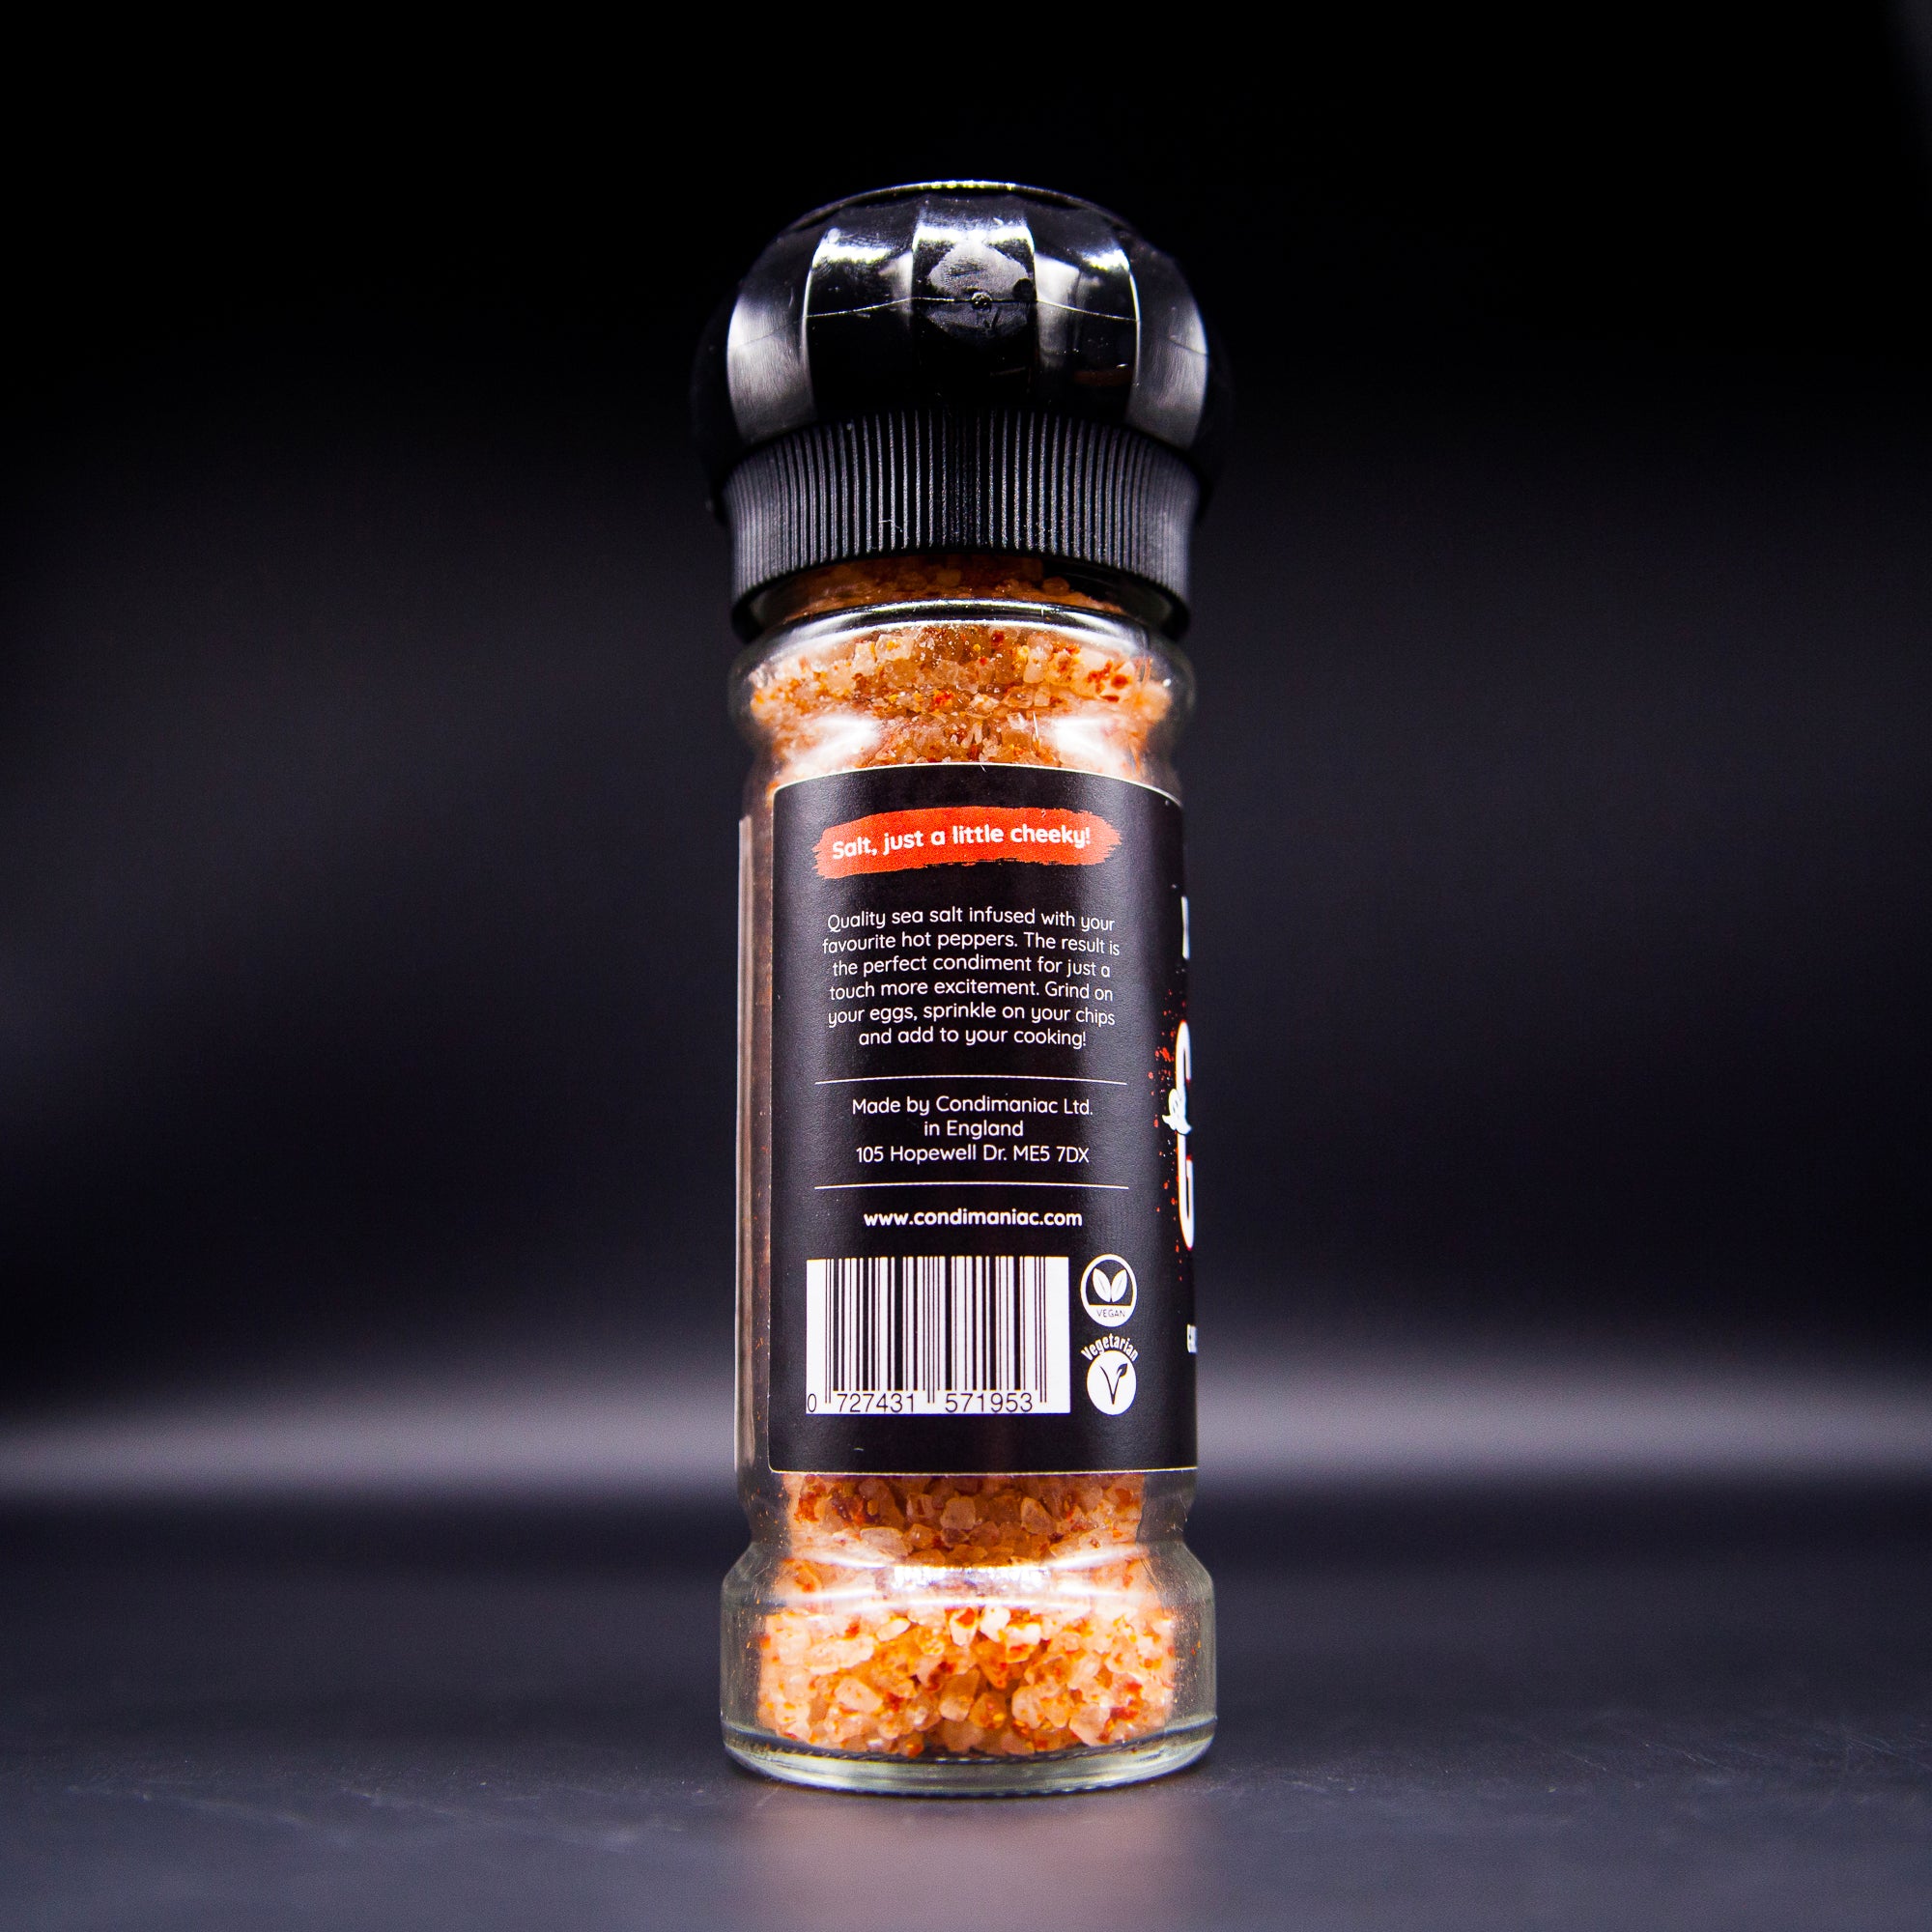 Condimaniac's 'Cheeky Salts' Carolina Reaper Chilli Infused Salt